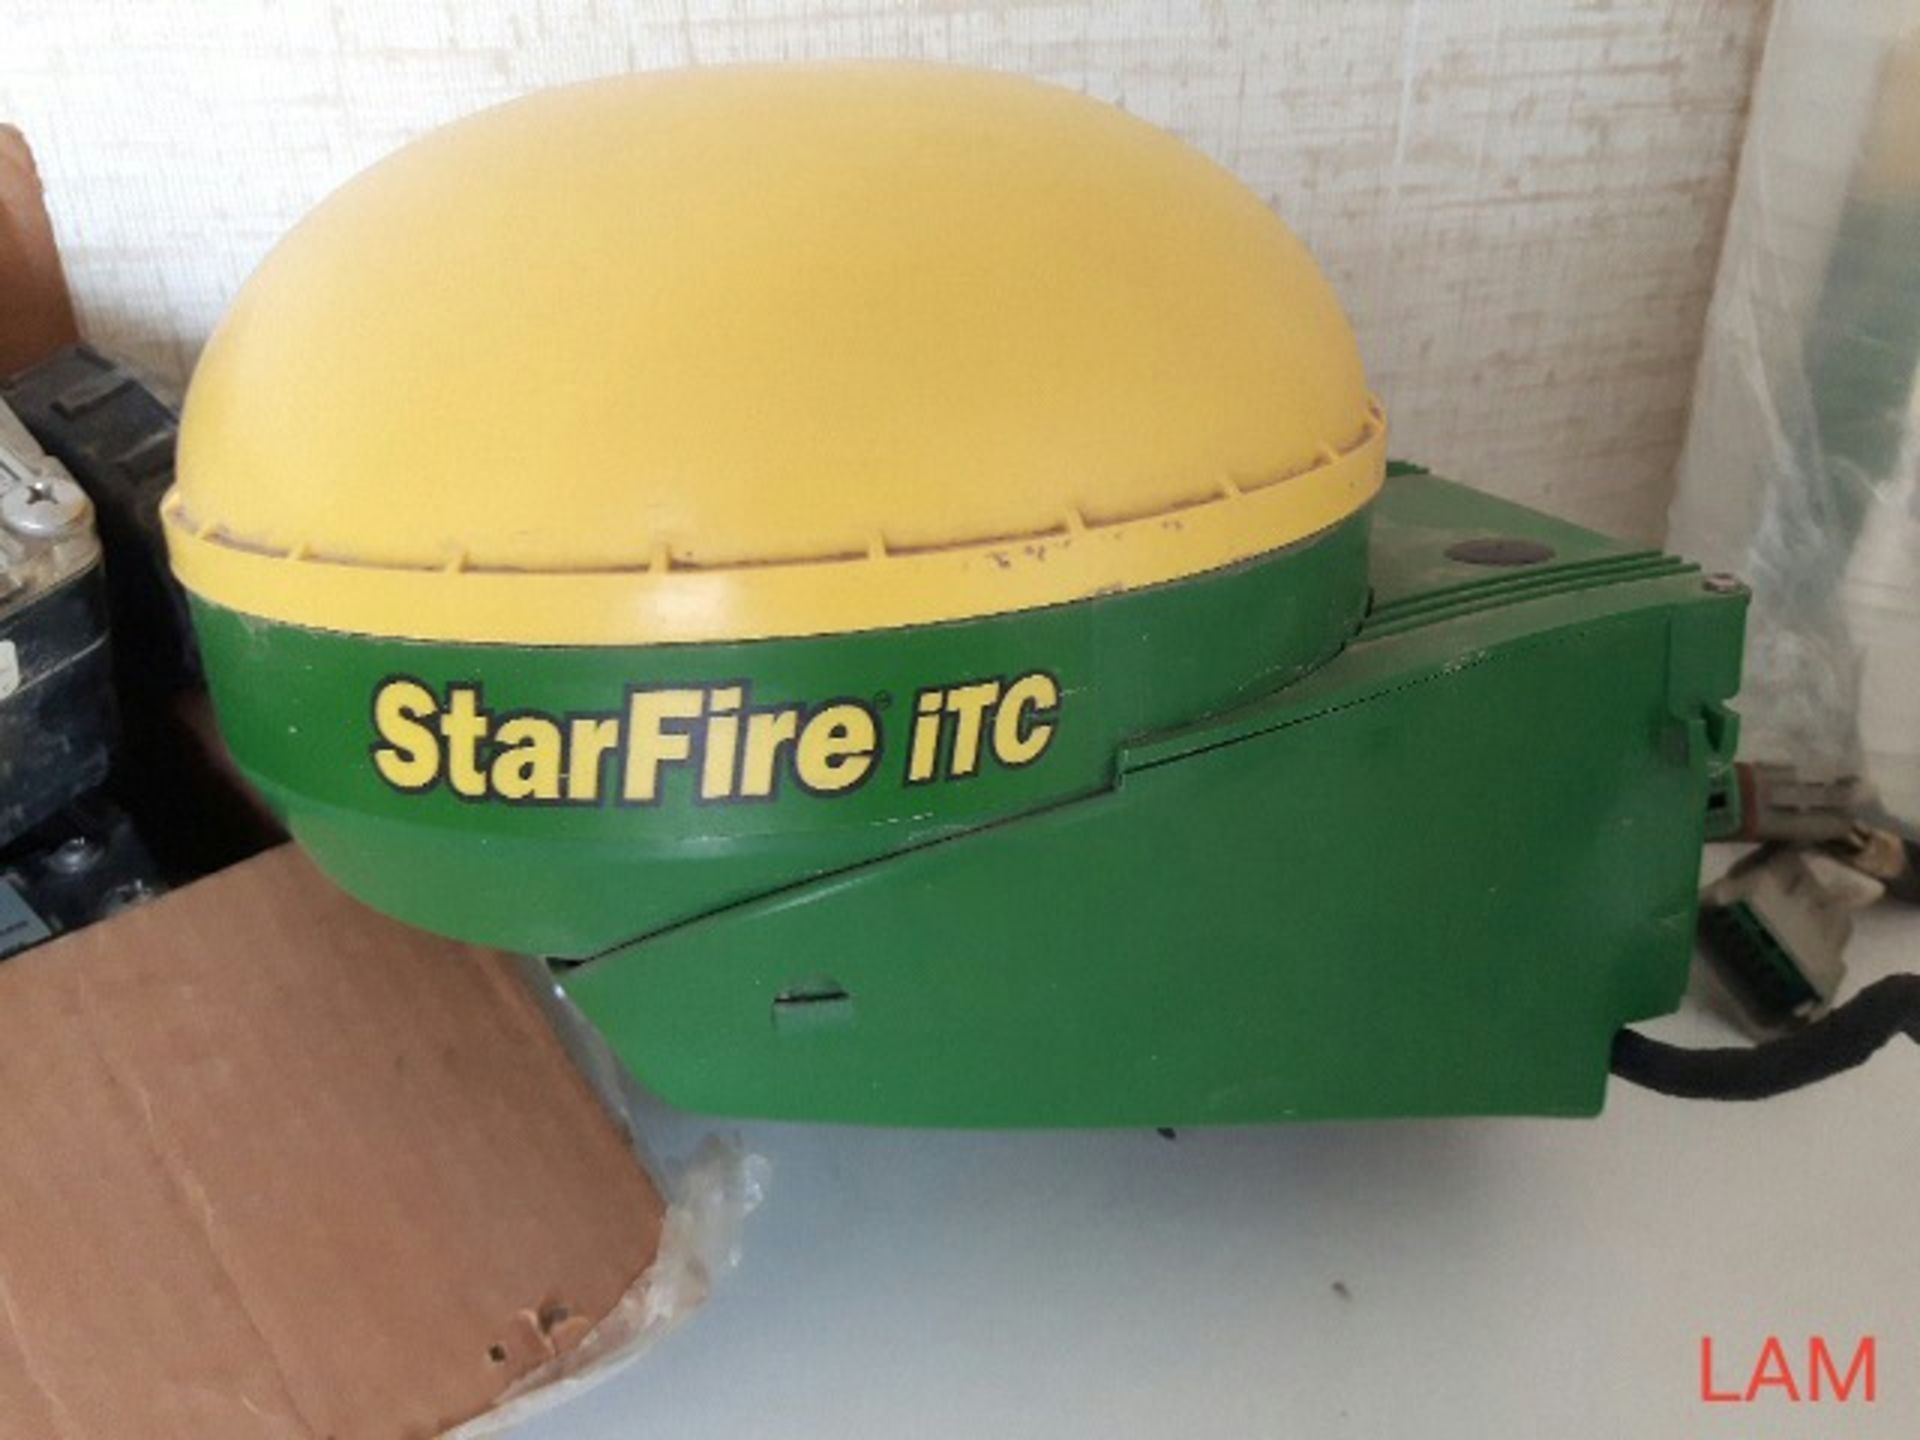 Starfire ITC Auto Steer Bubble